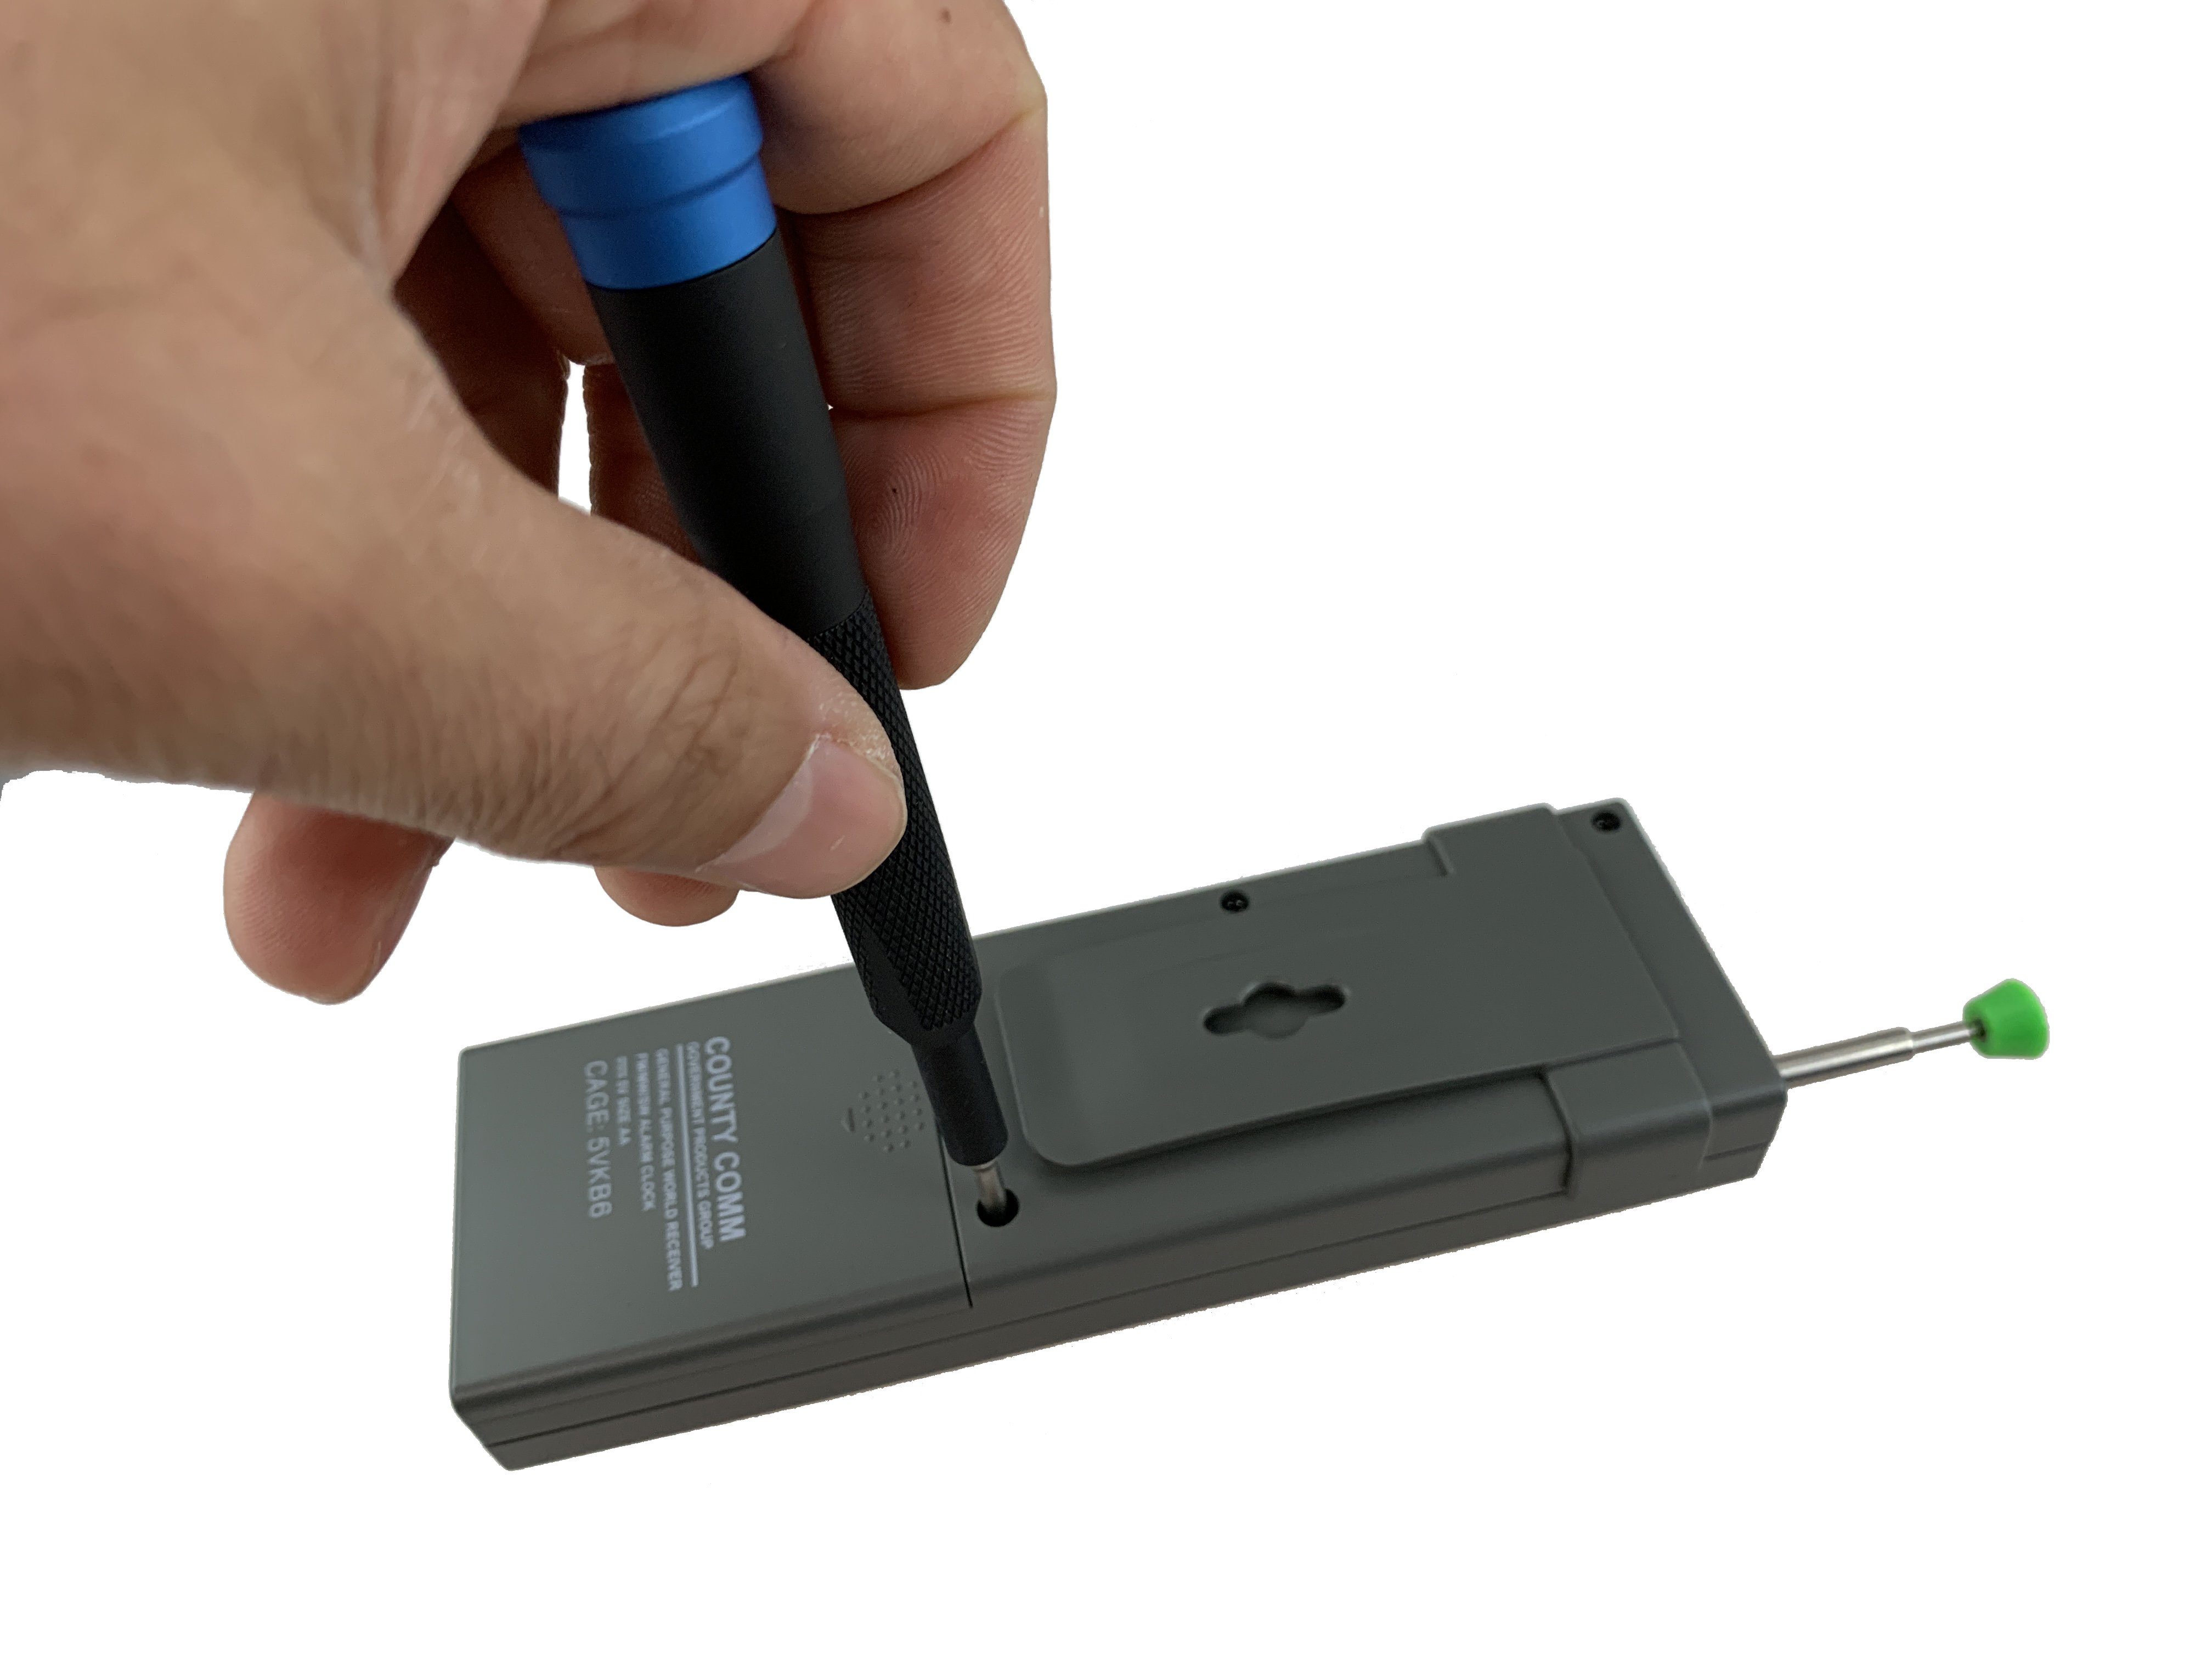 Mako Driver Kit - 64 Precision Bits For Precision Electronics Repair - CountyComm